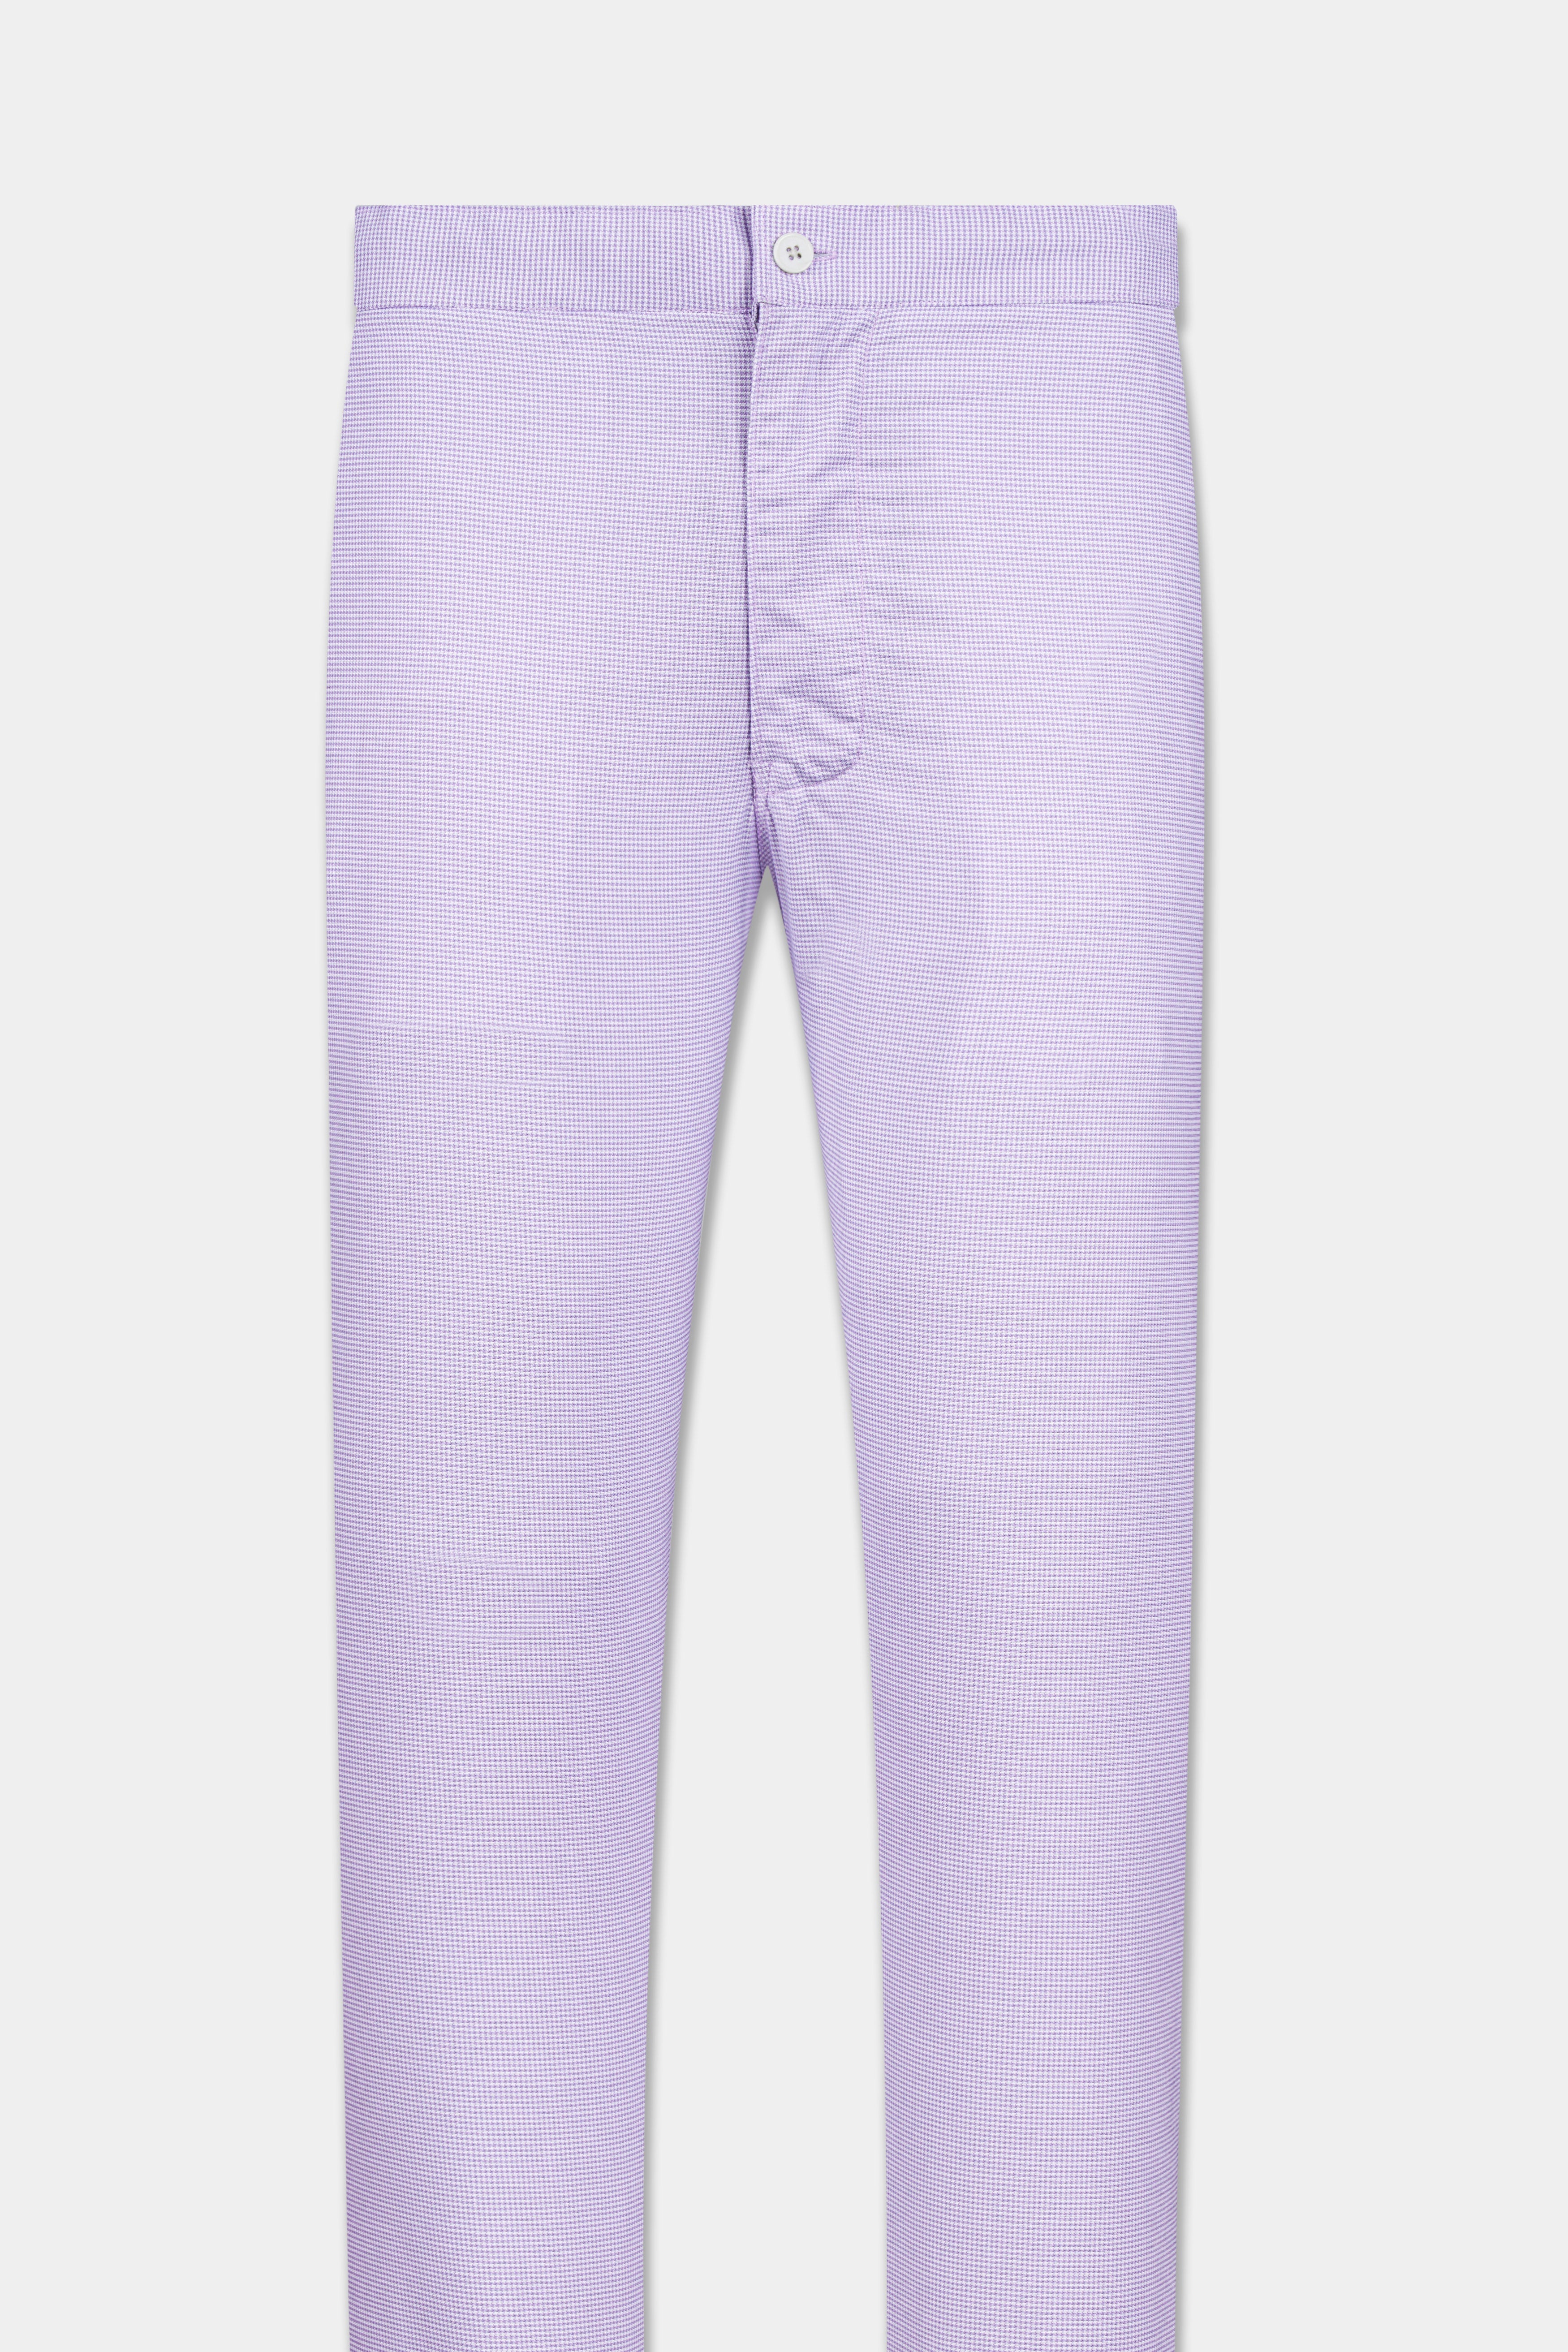 Moonraker Purple Houndstooth Textured Premium Cotton Lounge Pant